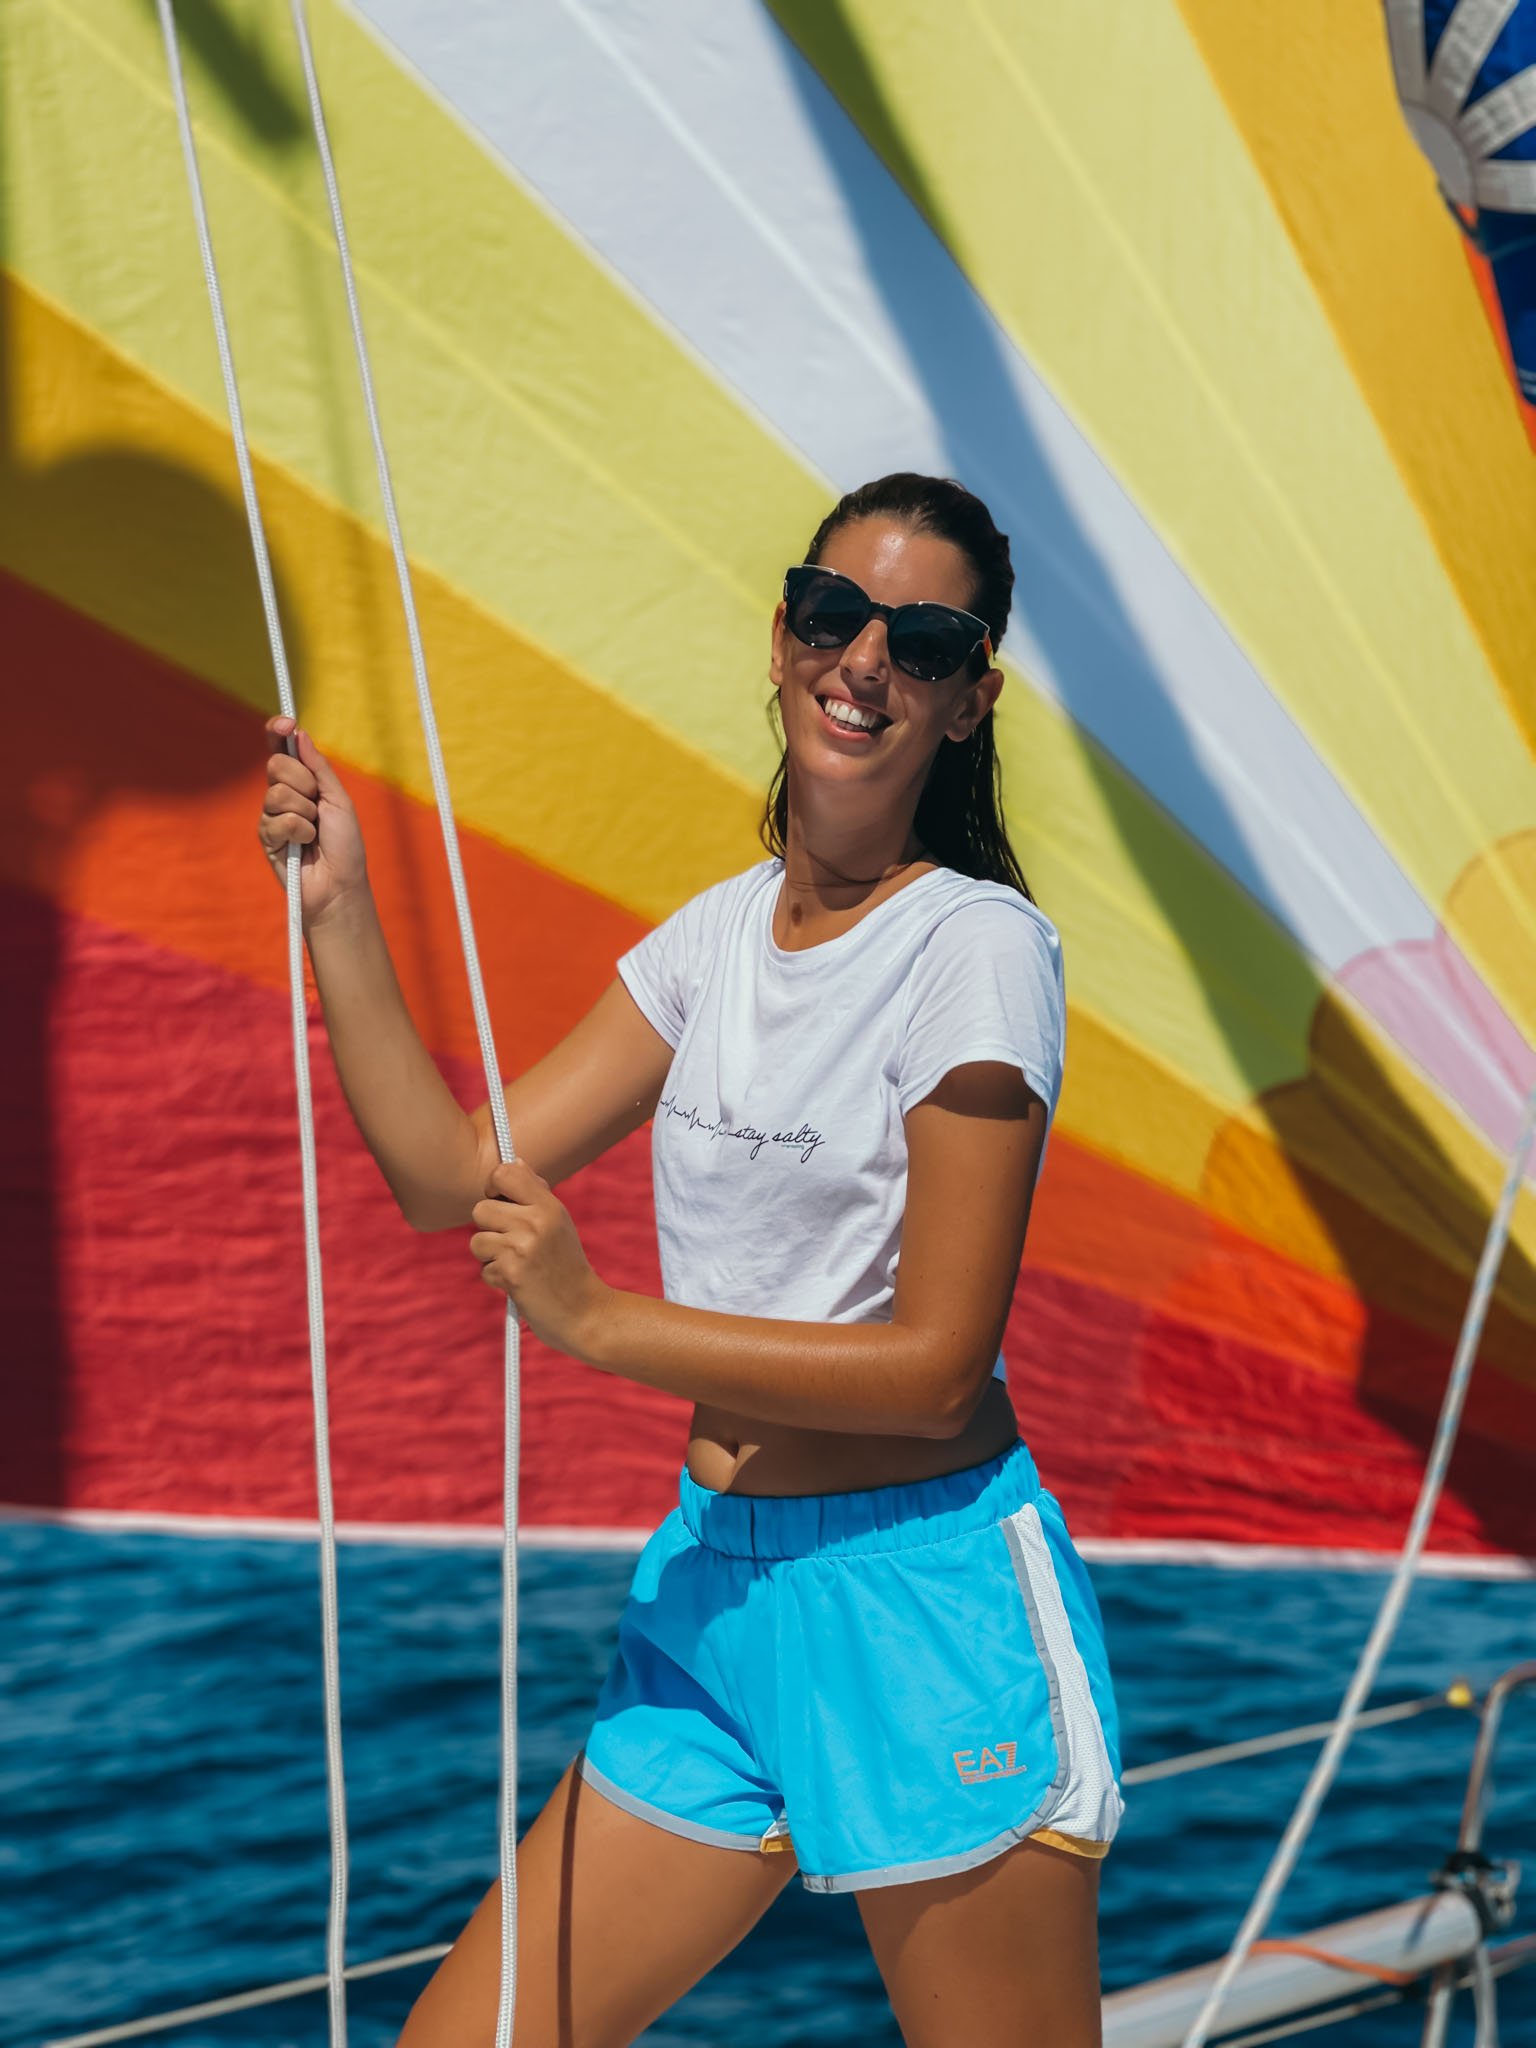 120 Best Sailing Gear ideas sailing gear, sailing, sailing outfit ...